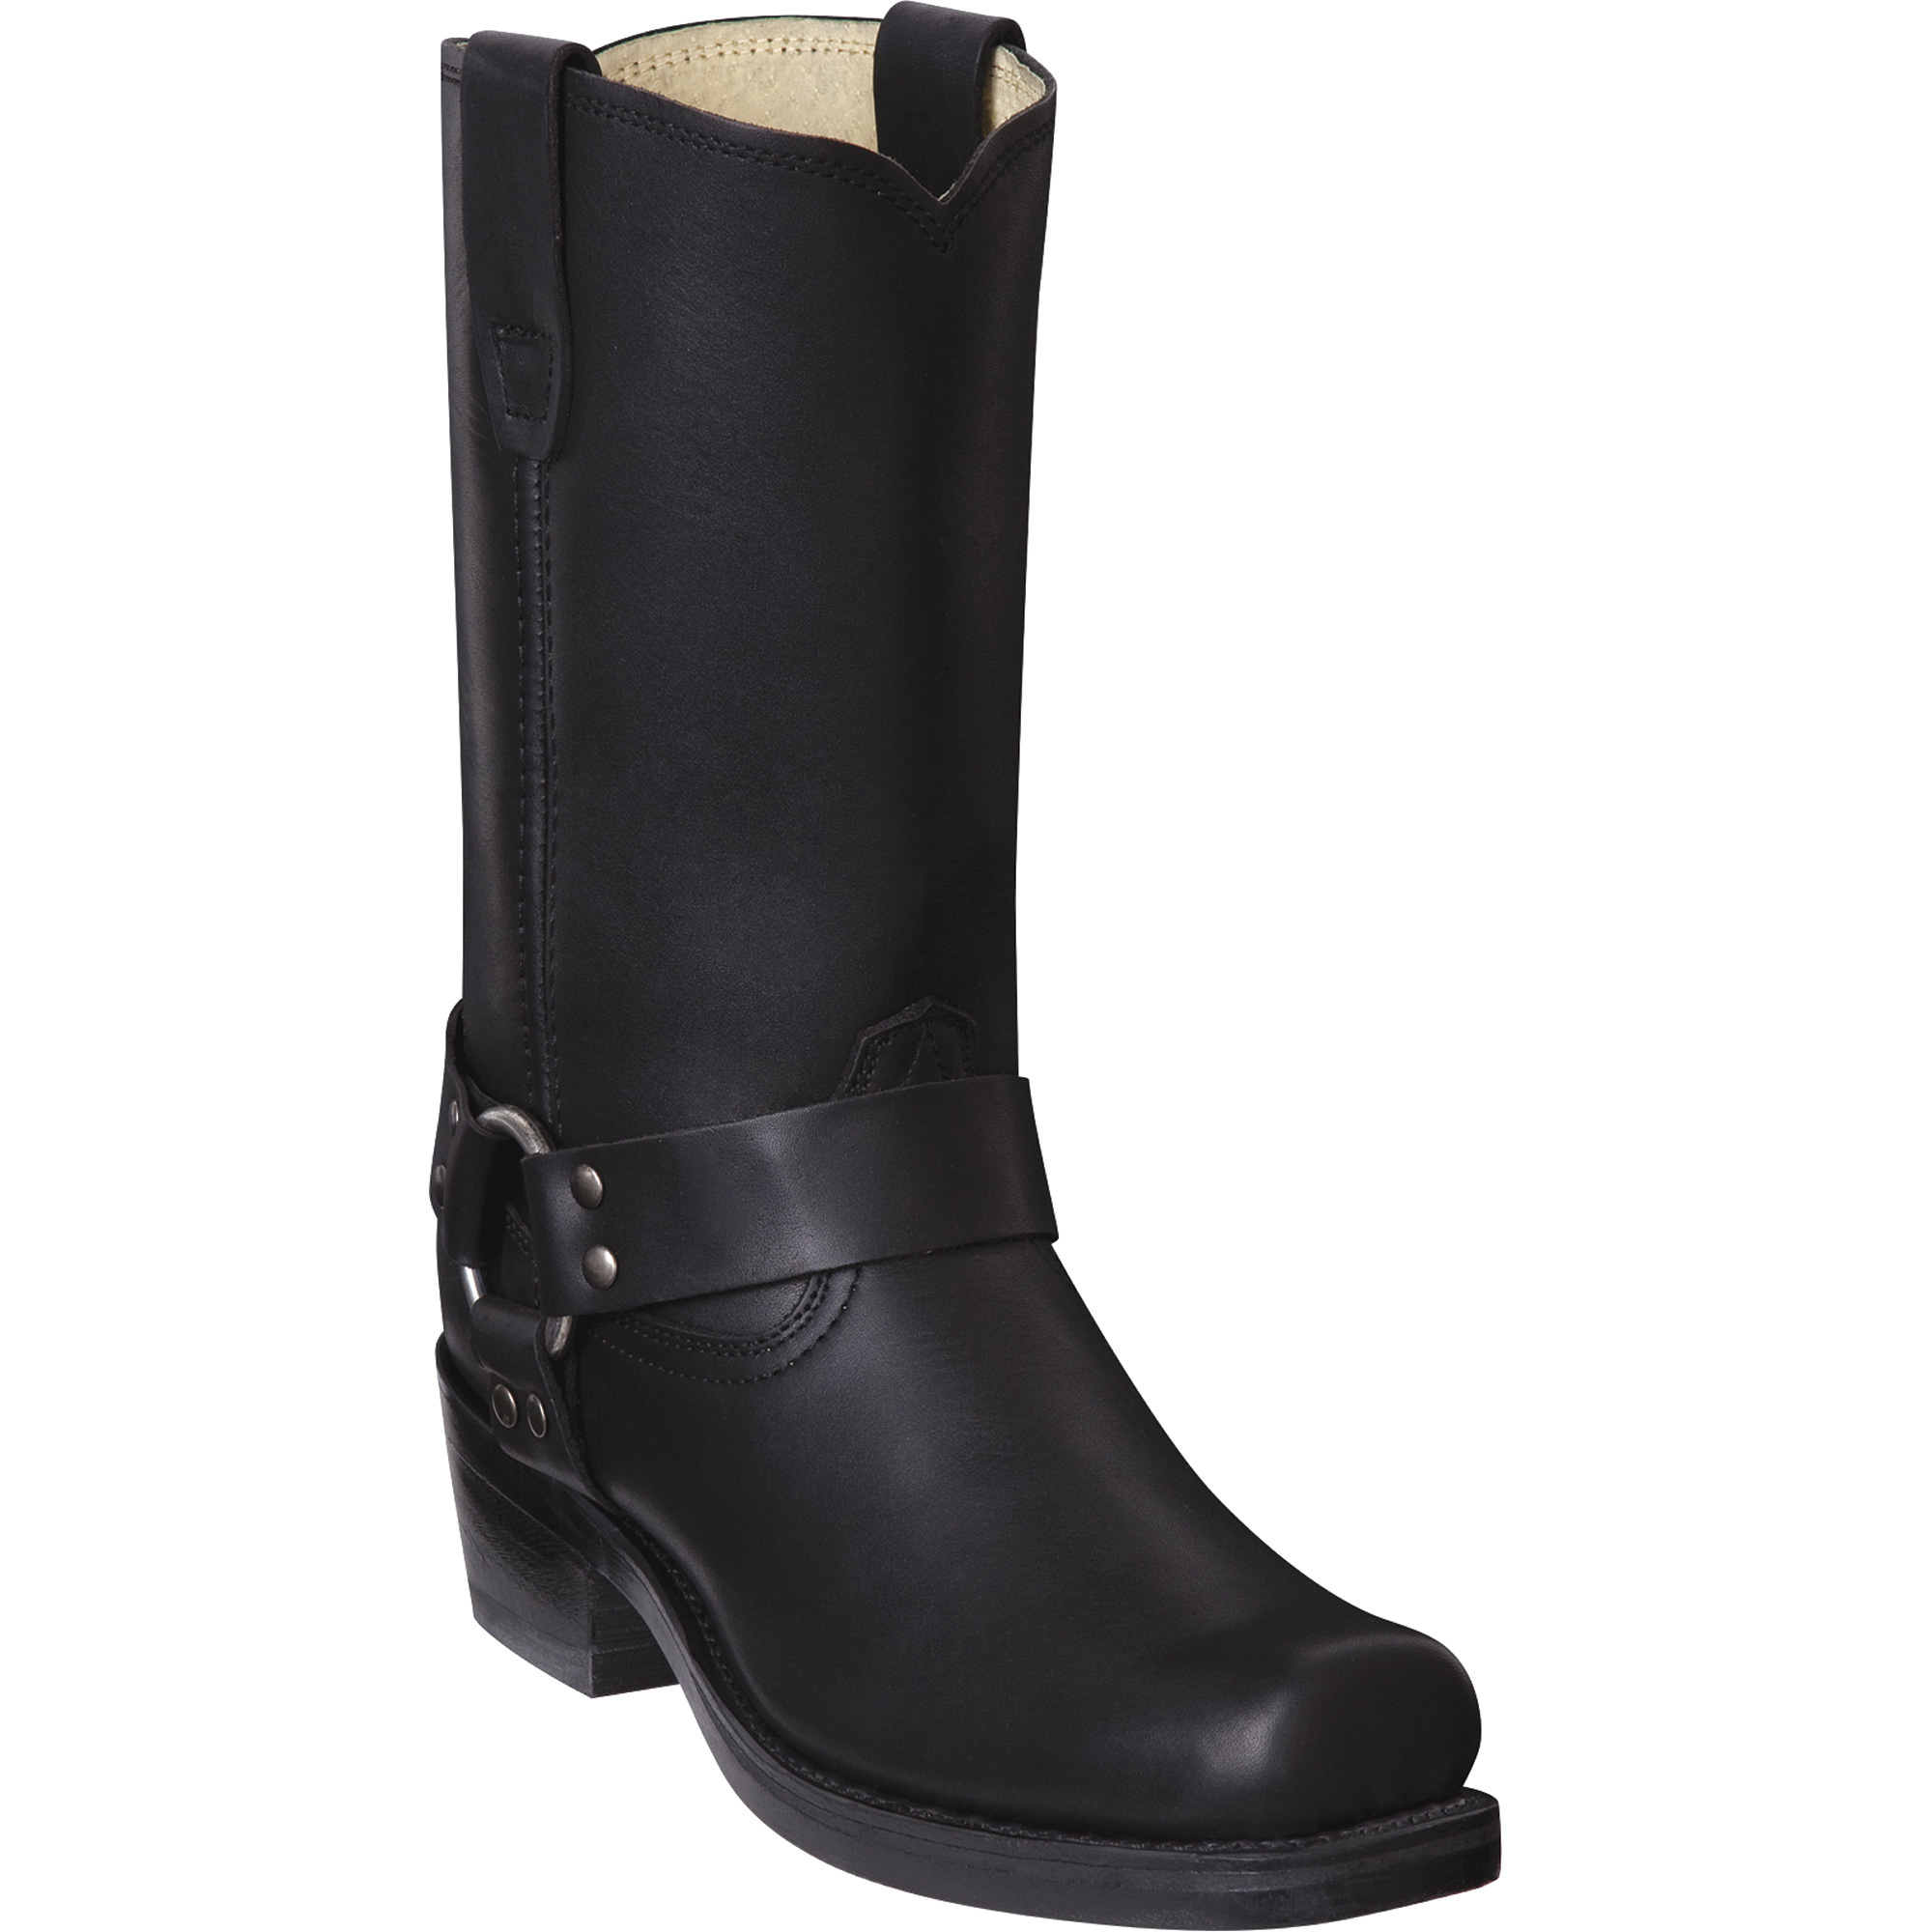 Durango Men's 11Inch Harness Boot - Black, Size 8 1/2, Model DB 510